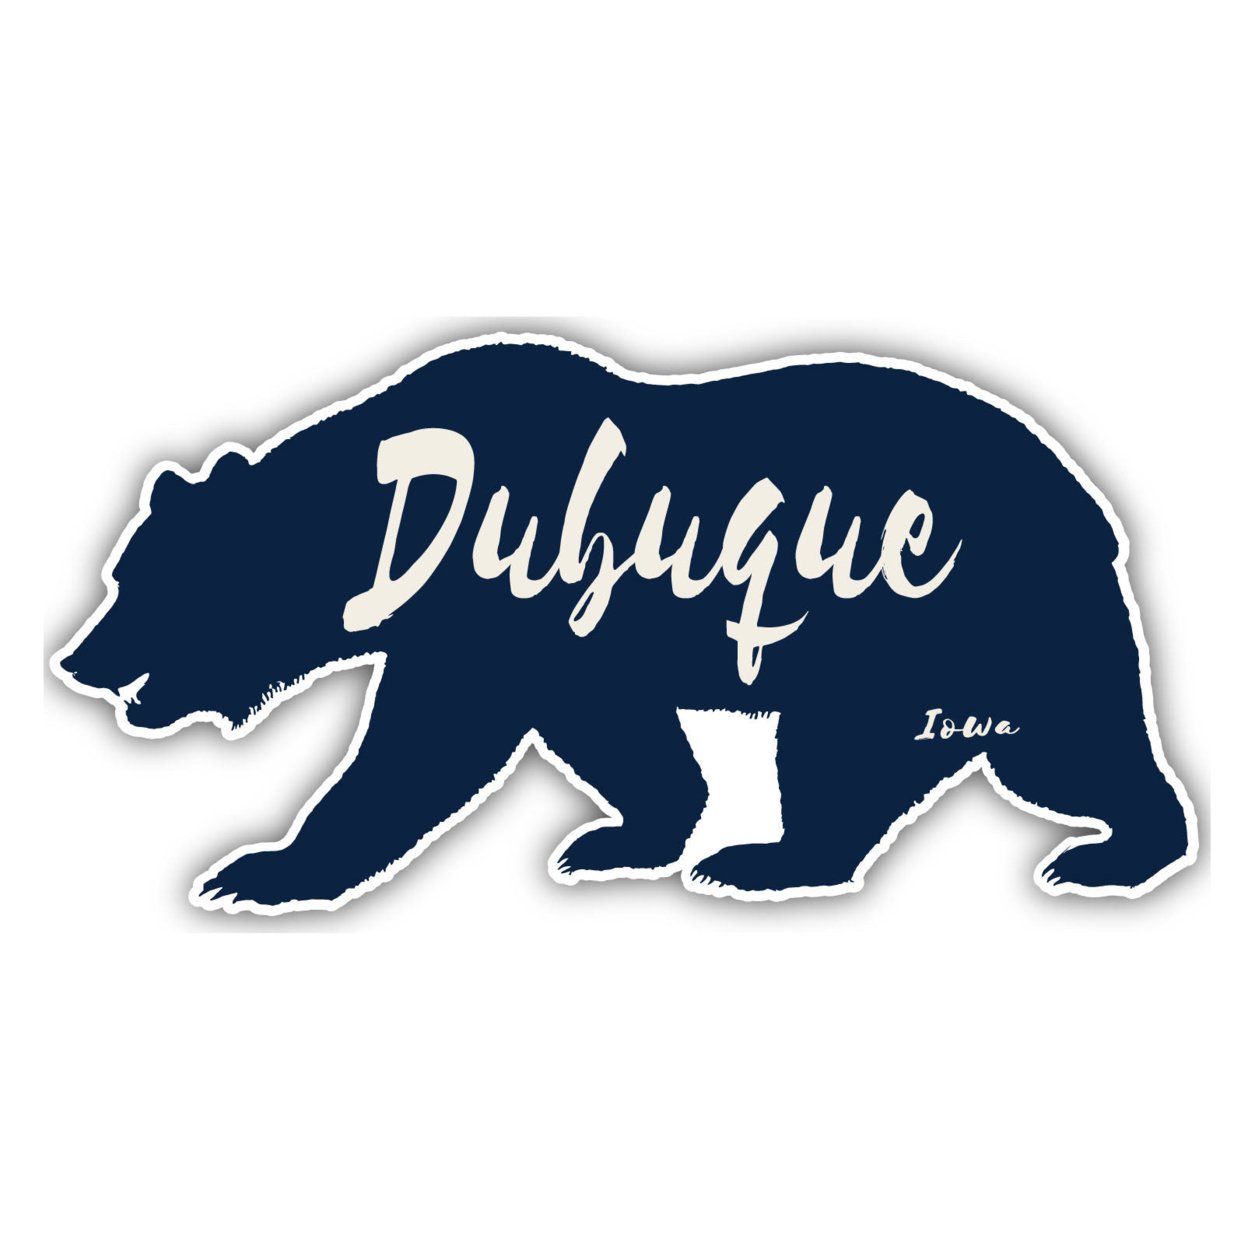 Dubuque Iowa Souvenir Decorative Stickers (Choose Theme And Size) - 4-Pack, 2-Inch, Bear